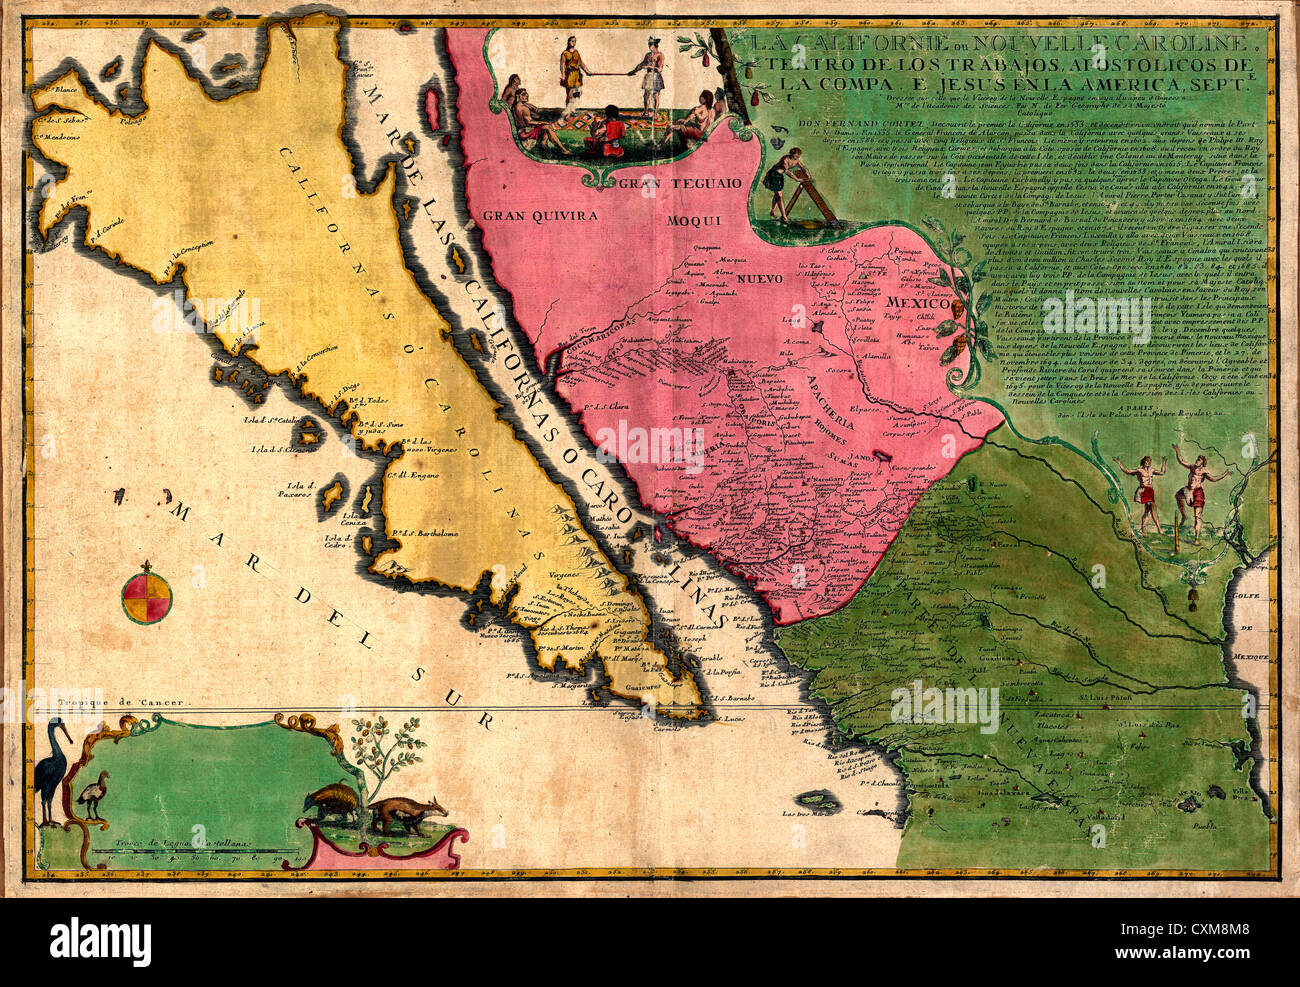 California o Nueva Carolina - vintage mapa, circa 1720 Foto de stock